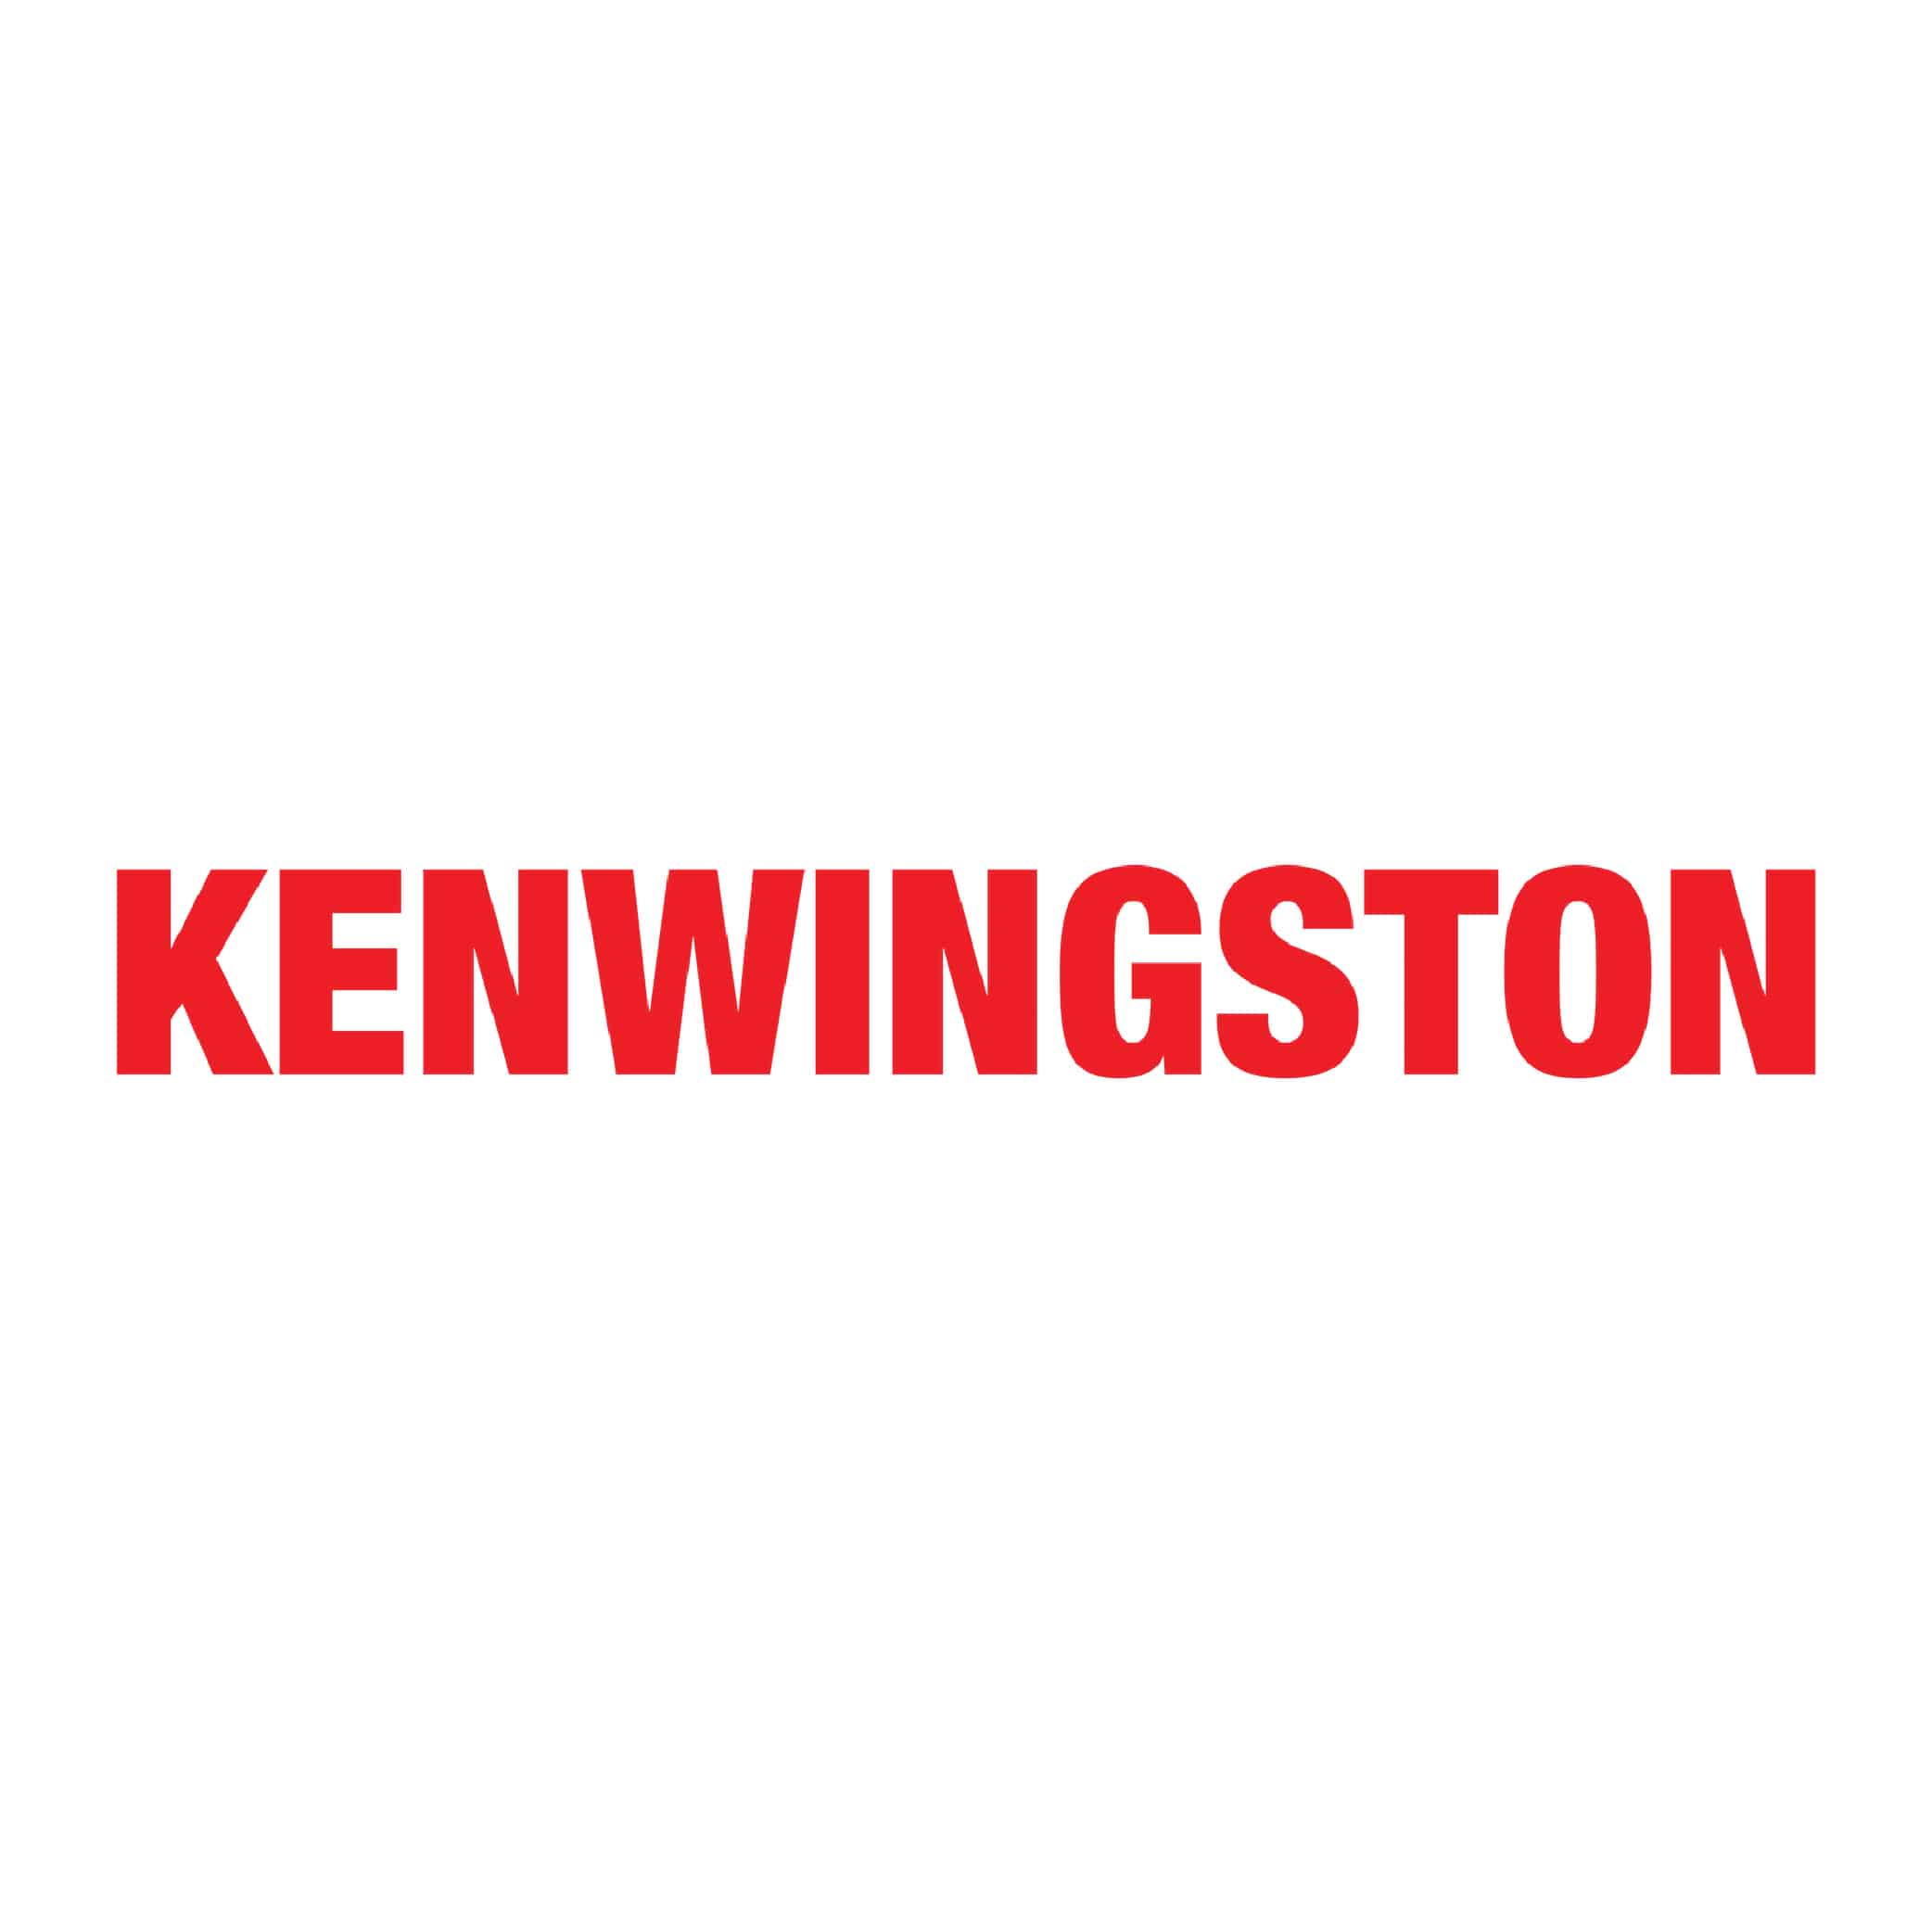 Kenwingston logo